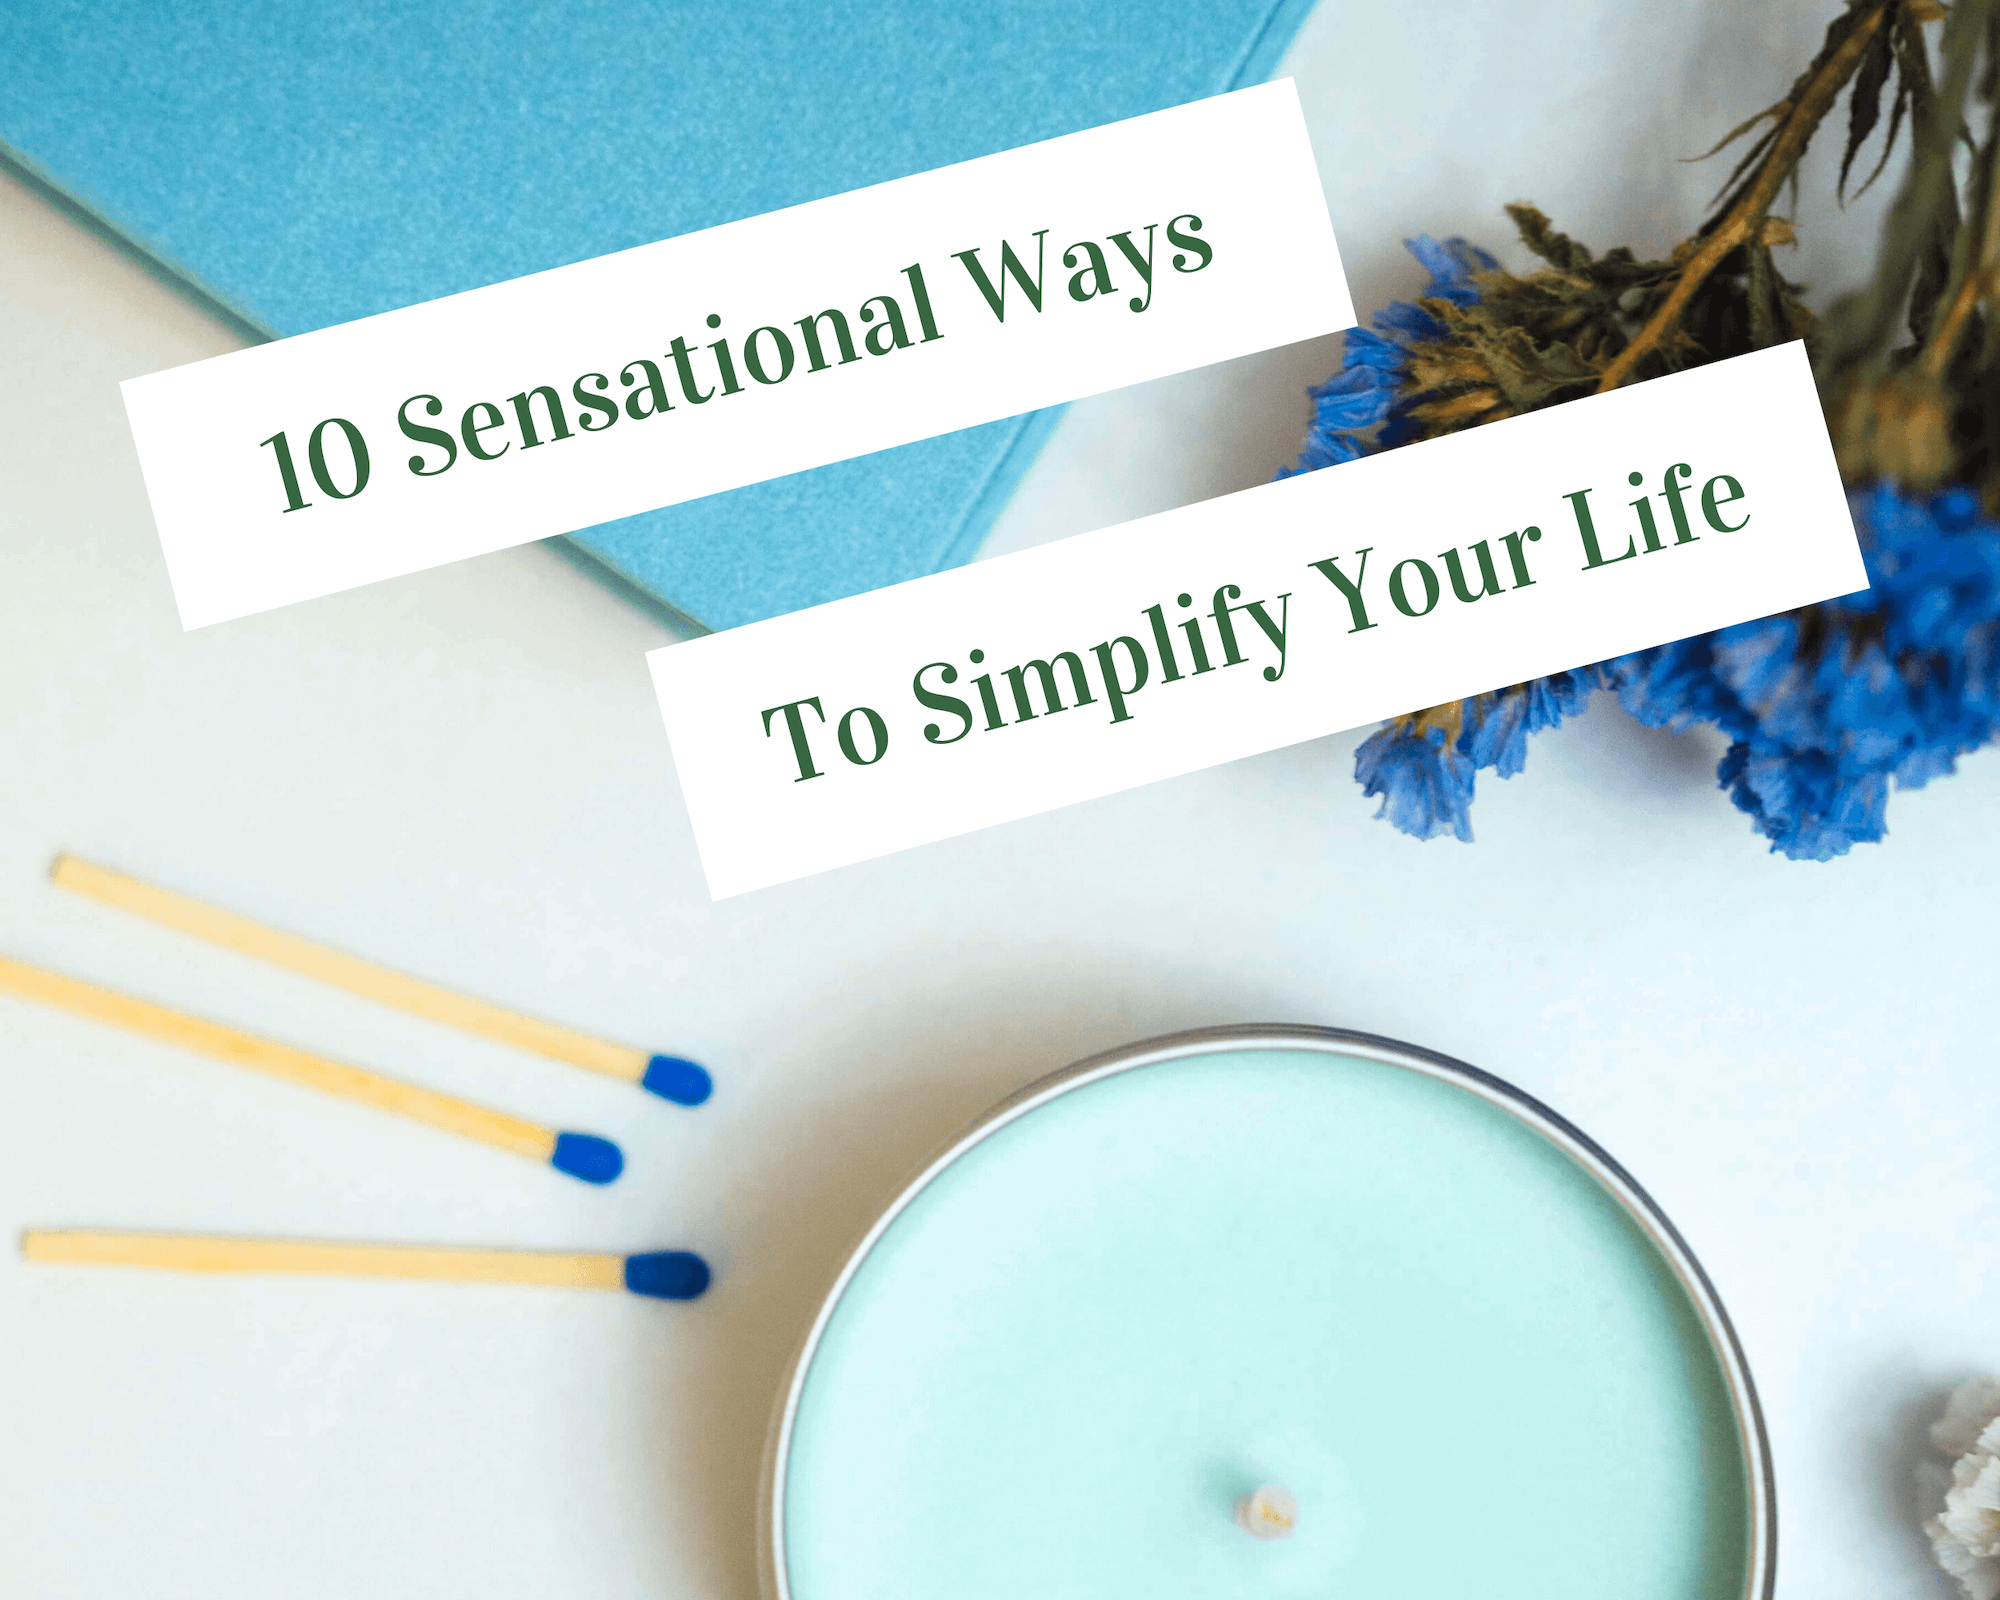 10-sensational-ways-to-simplify-your-life-today-mind-medicine